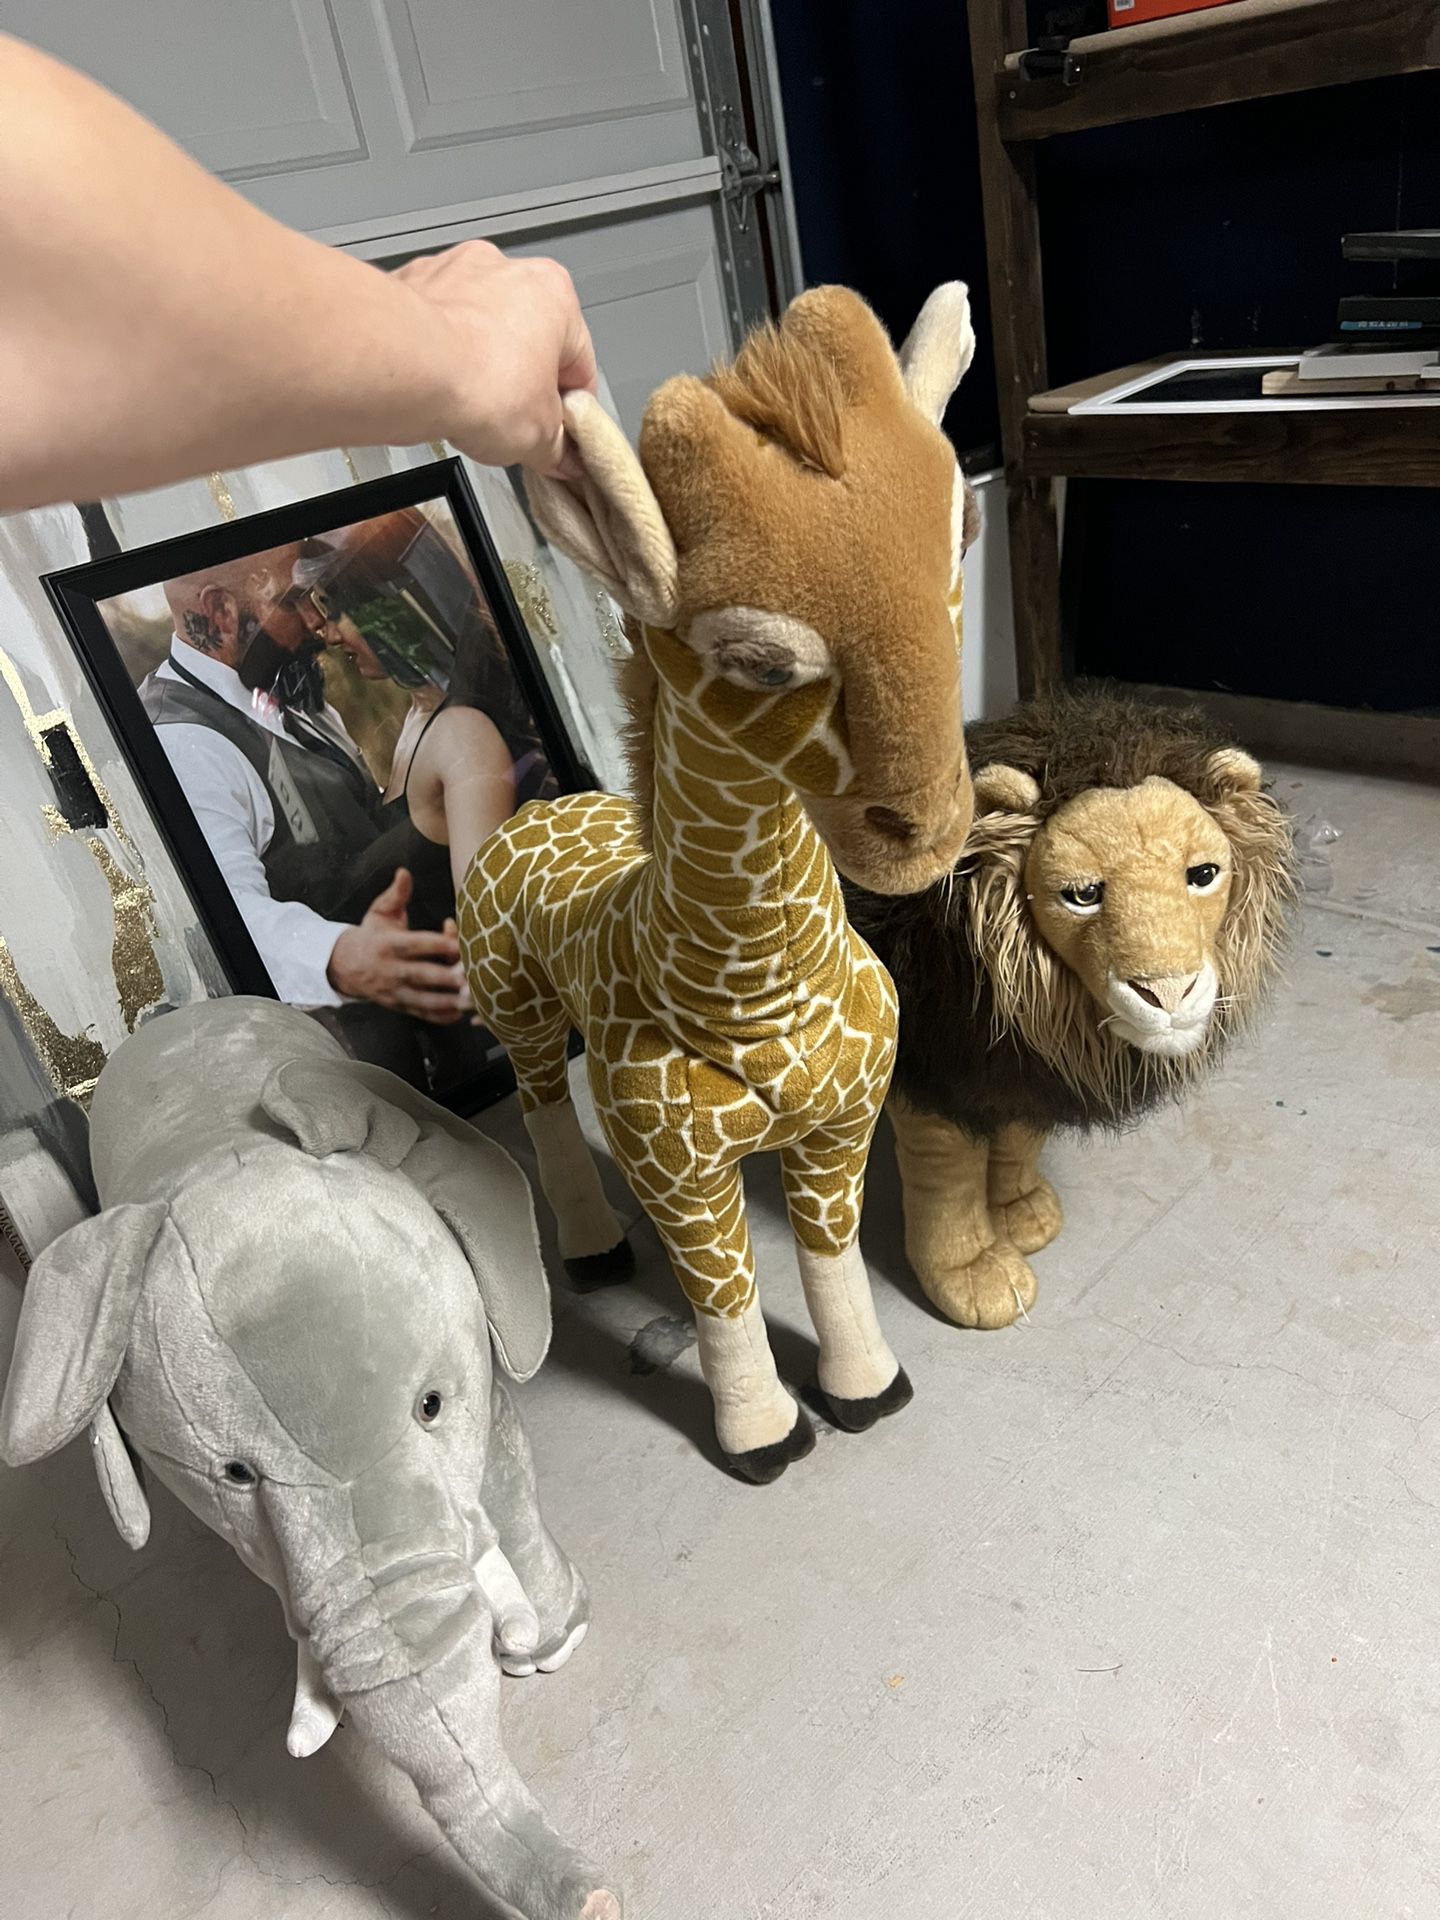 FAO Schwarz - Toys R Us Jumbo Lion, Giraffe and Elephant 